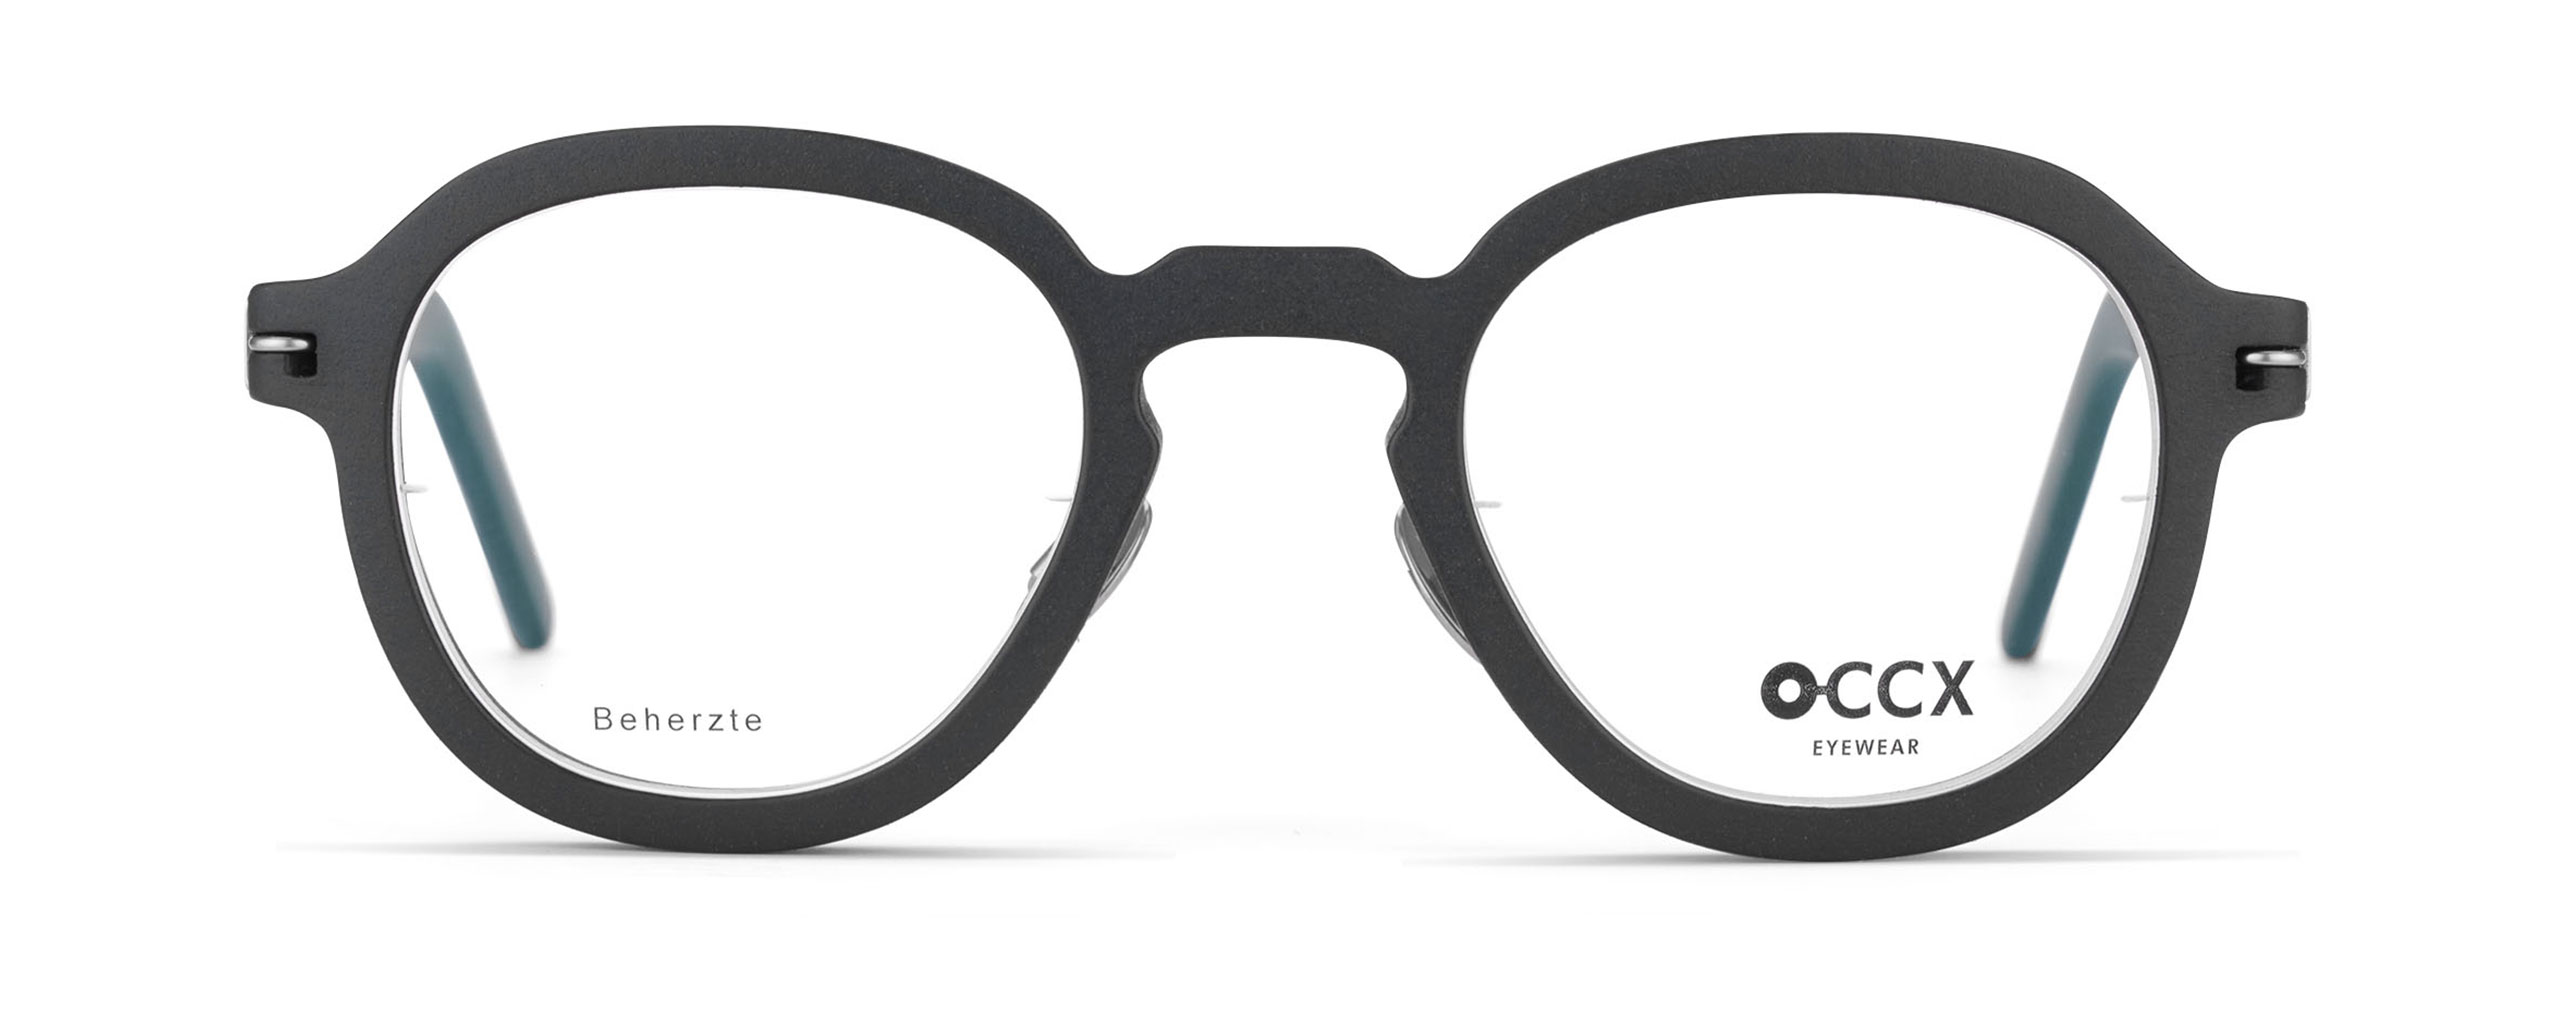 O-CCX Eyewear Avantgarde Bold Beherzte Schiefergrau